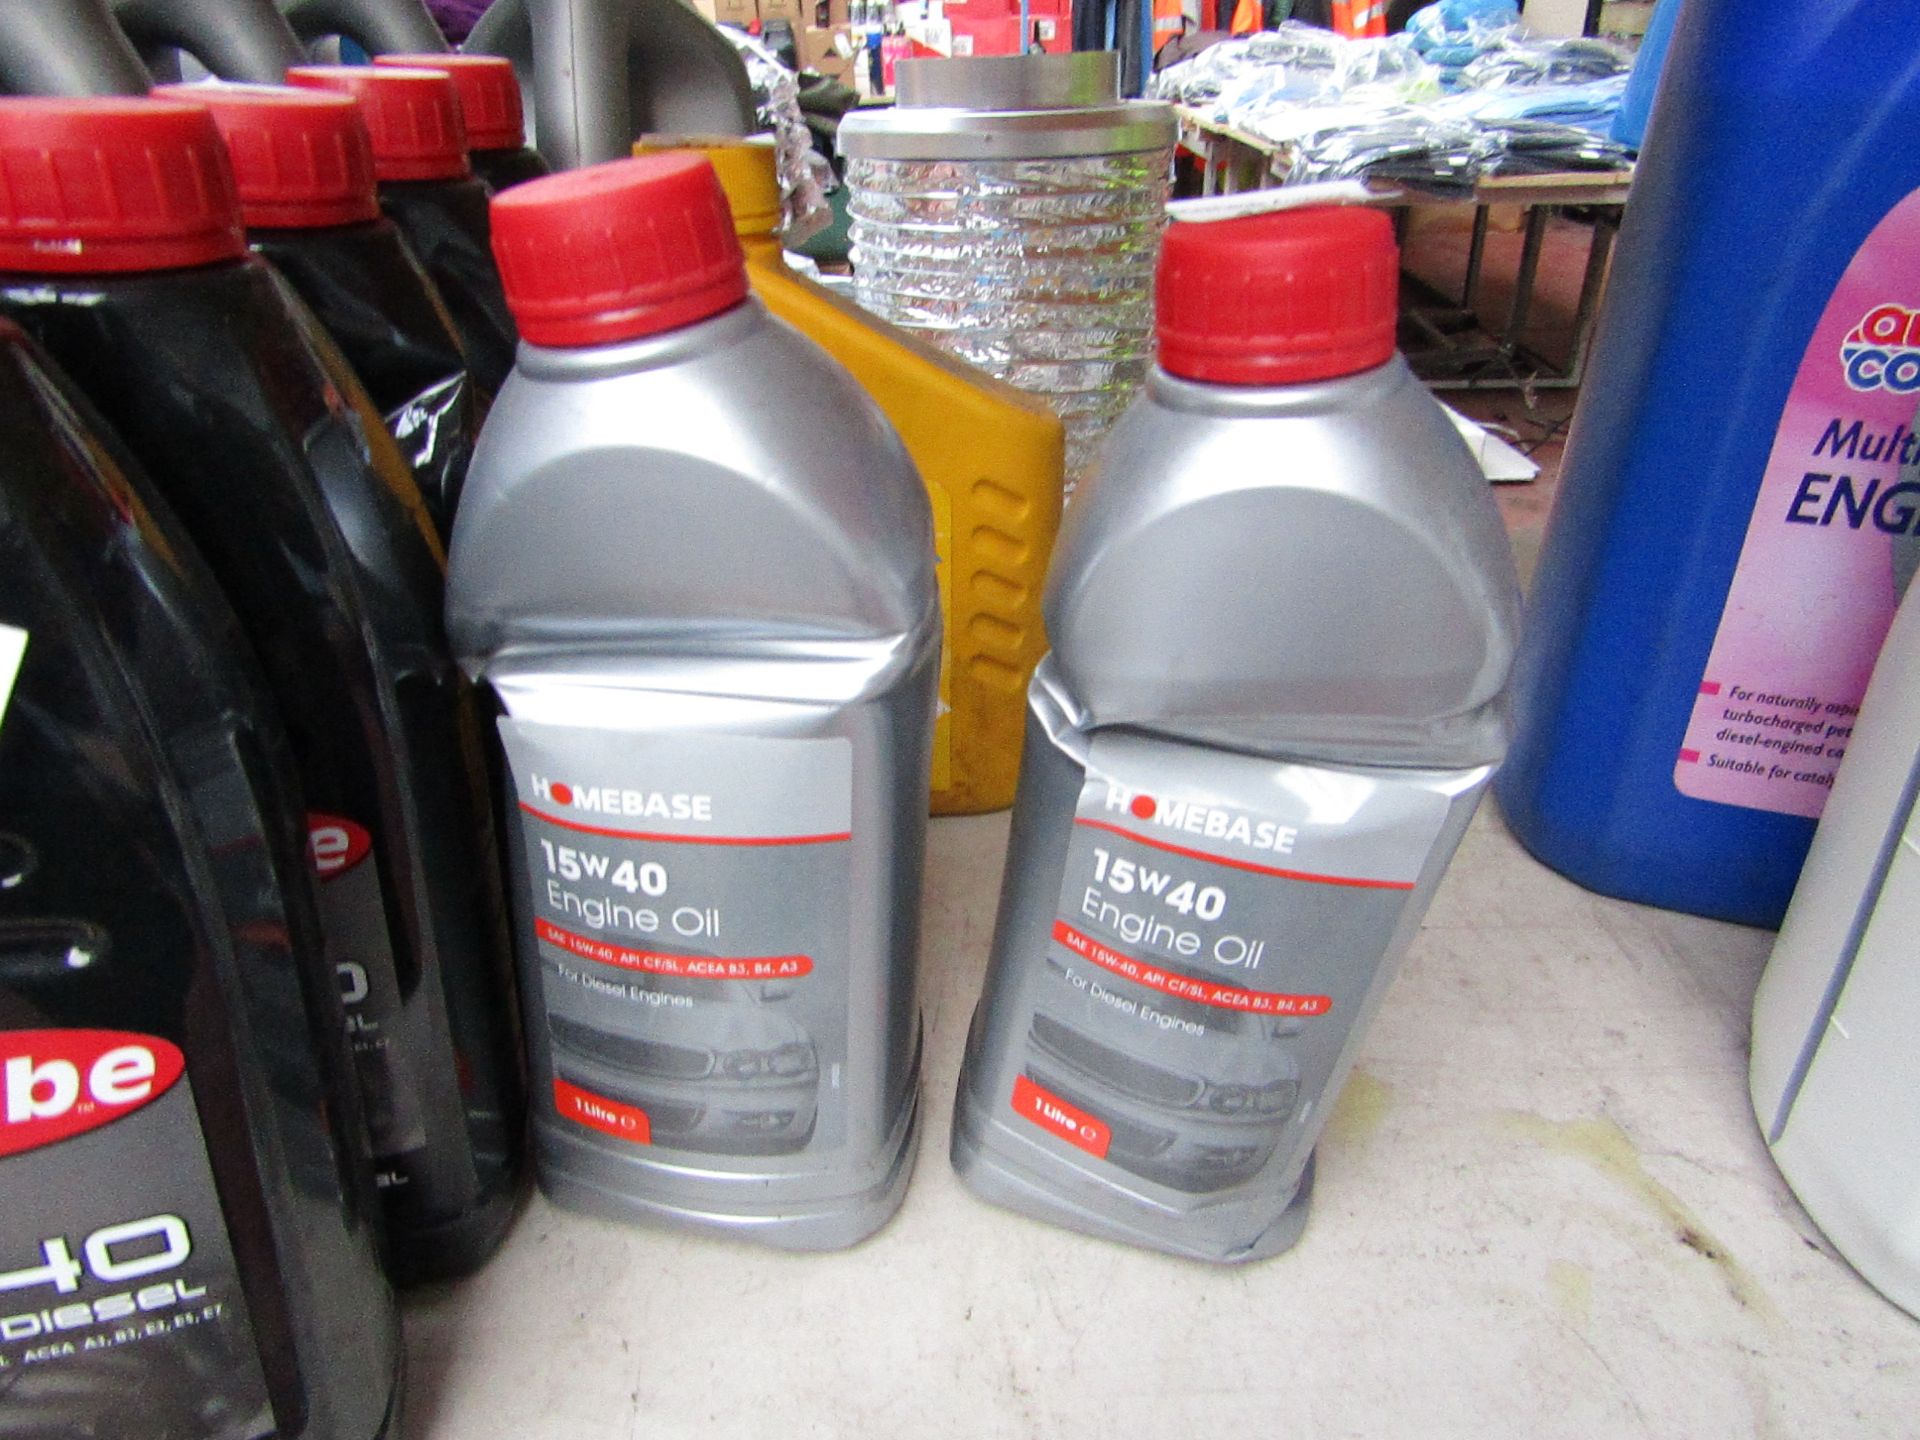 1ltr bottle of Shell Supoer Helix 15w-40 engine oil, new